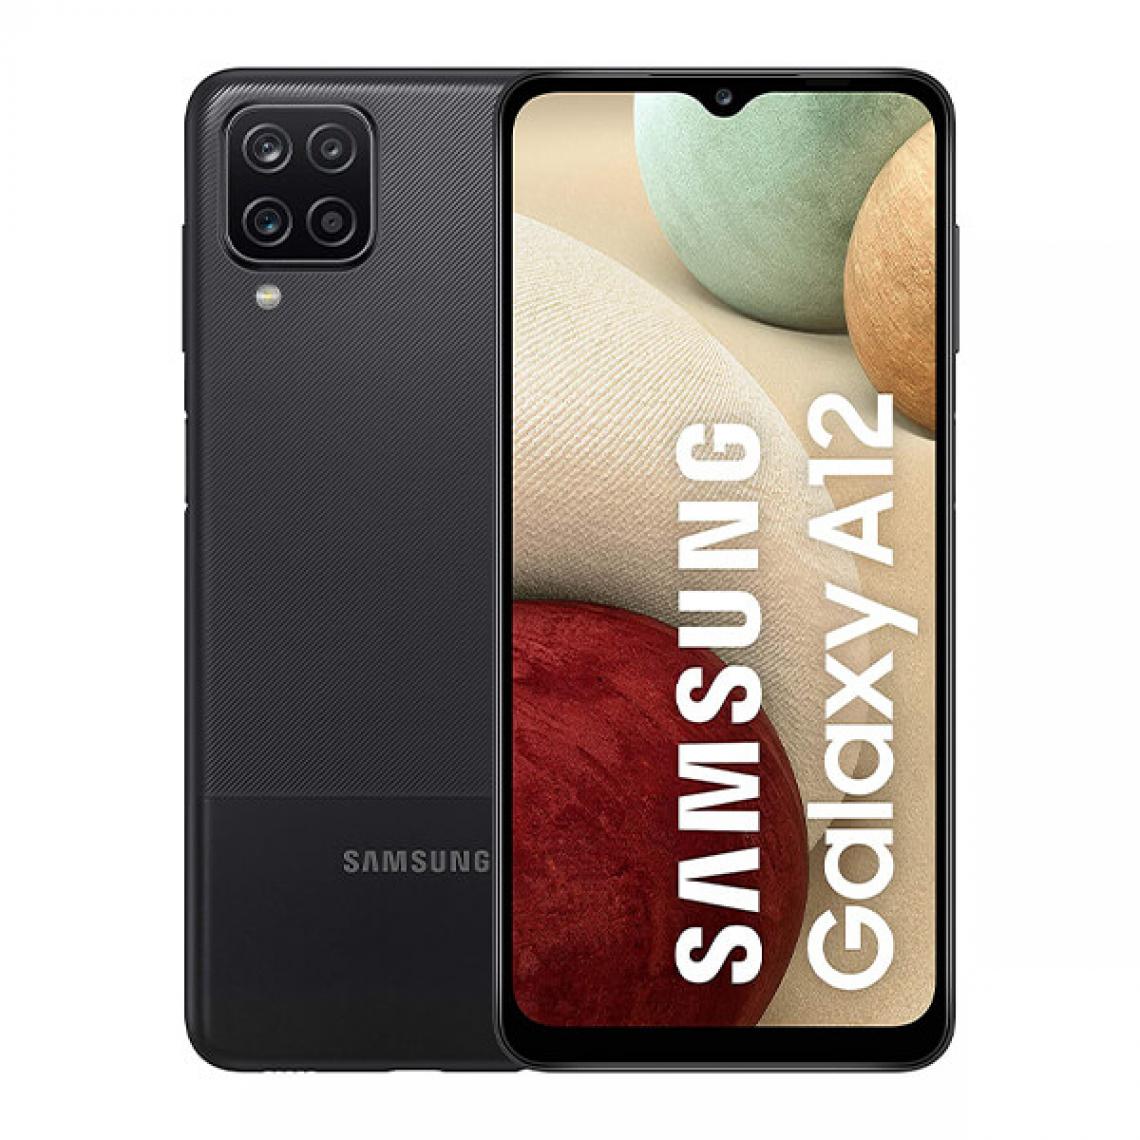 Samsung - Samsung Galaxy A12 4 Go / 128 Go Noir (Black) Double SIM avec NFC SM-A127 - Smartphone Android